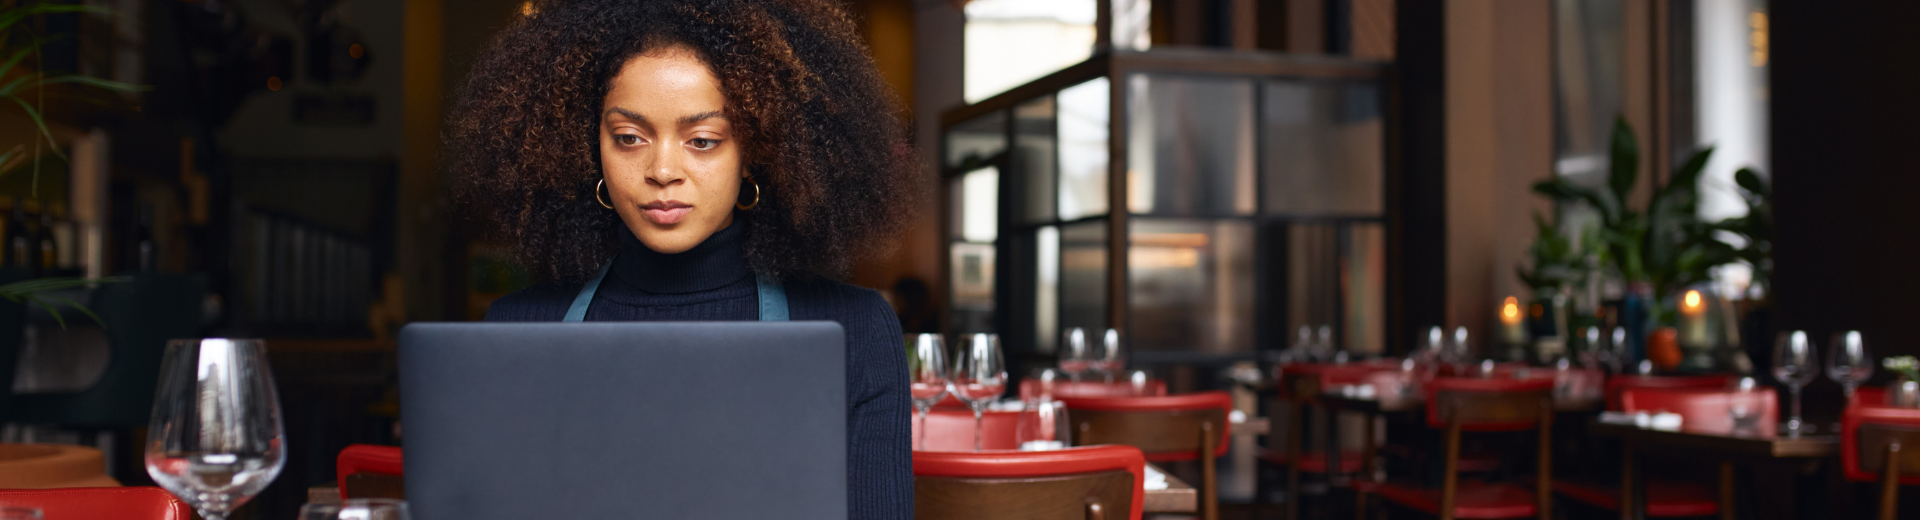 Female Restaurant Owner Reviewing Balance Sheet On Laptop